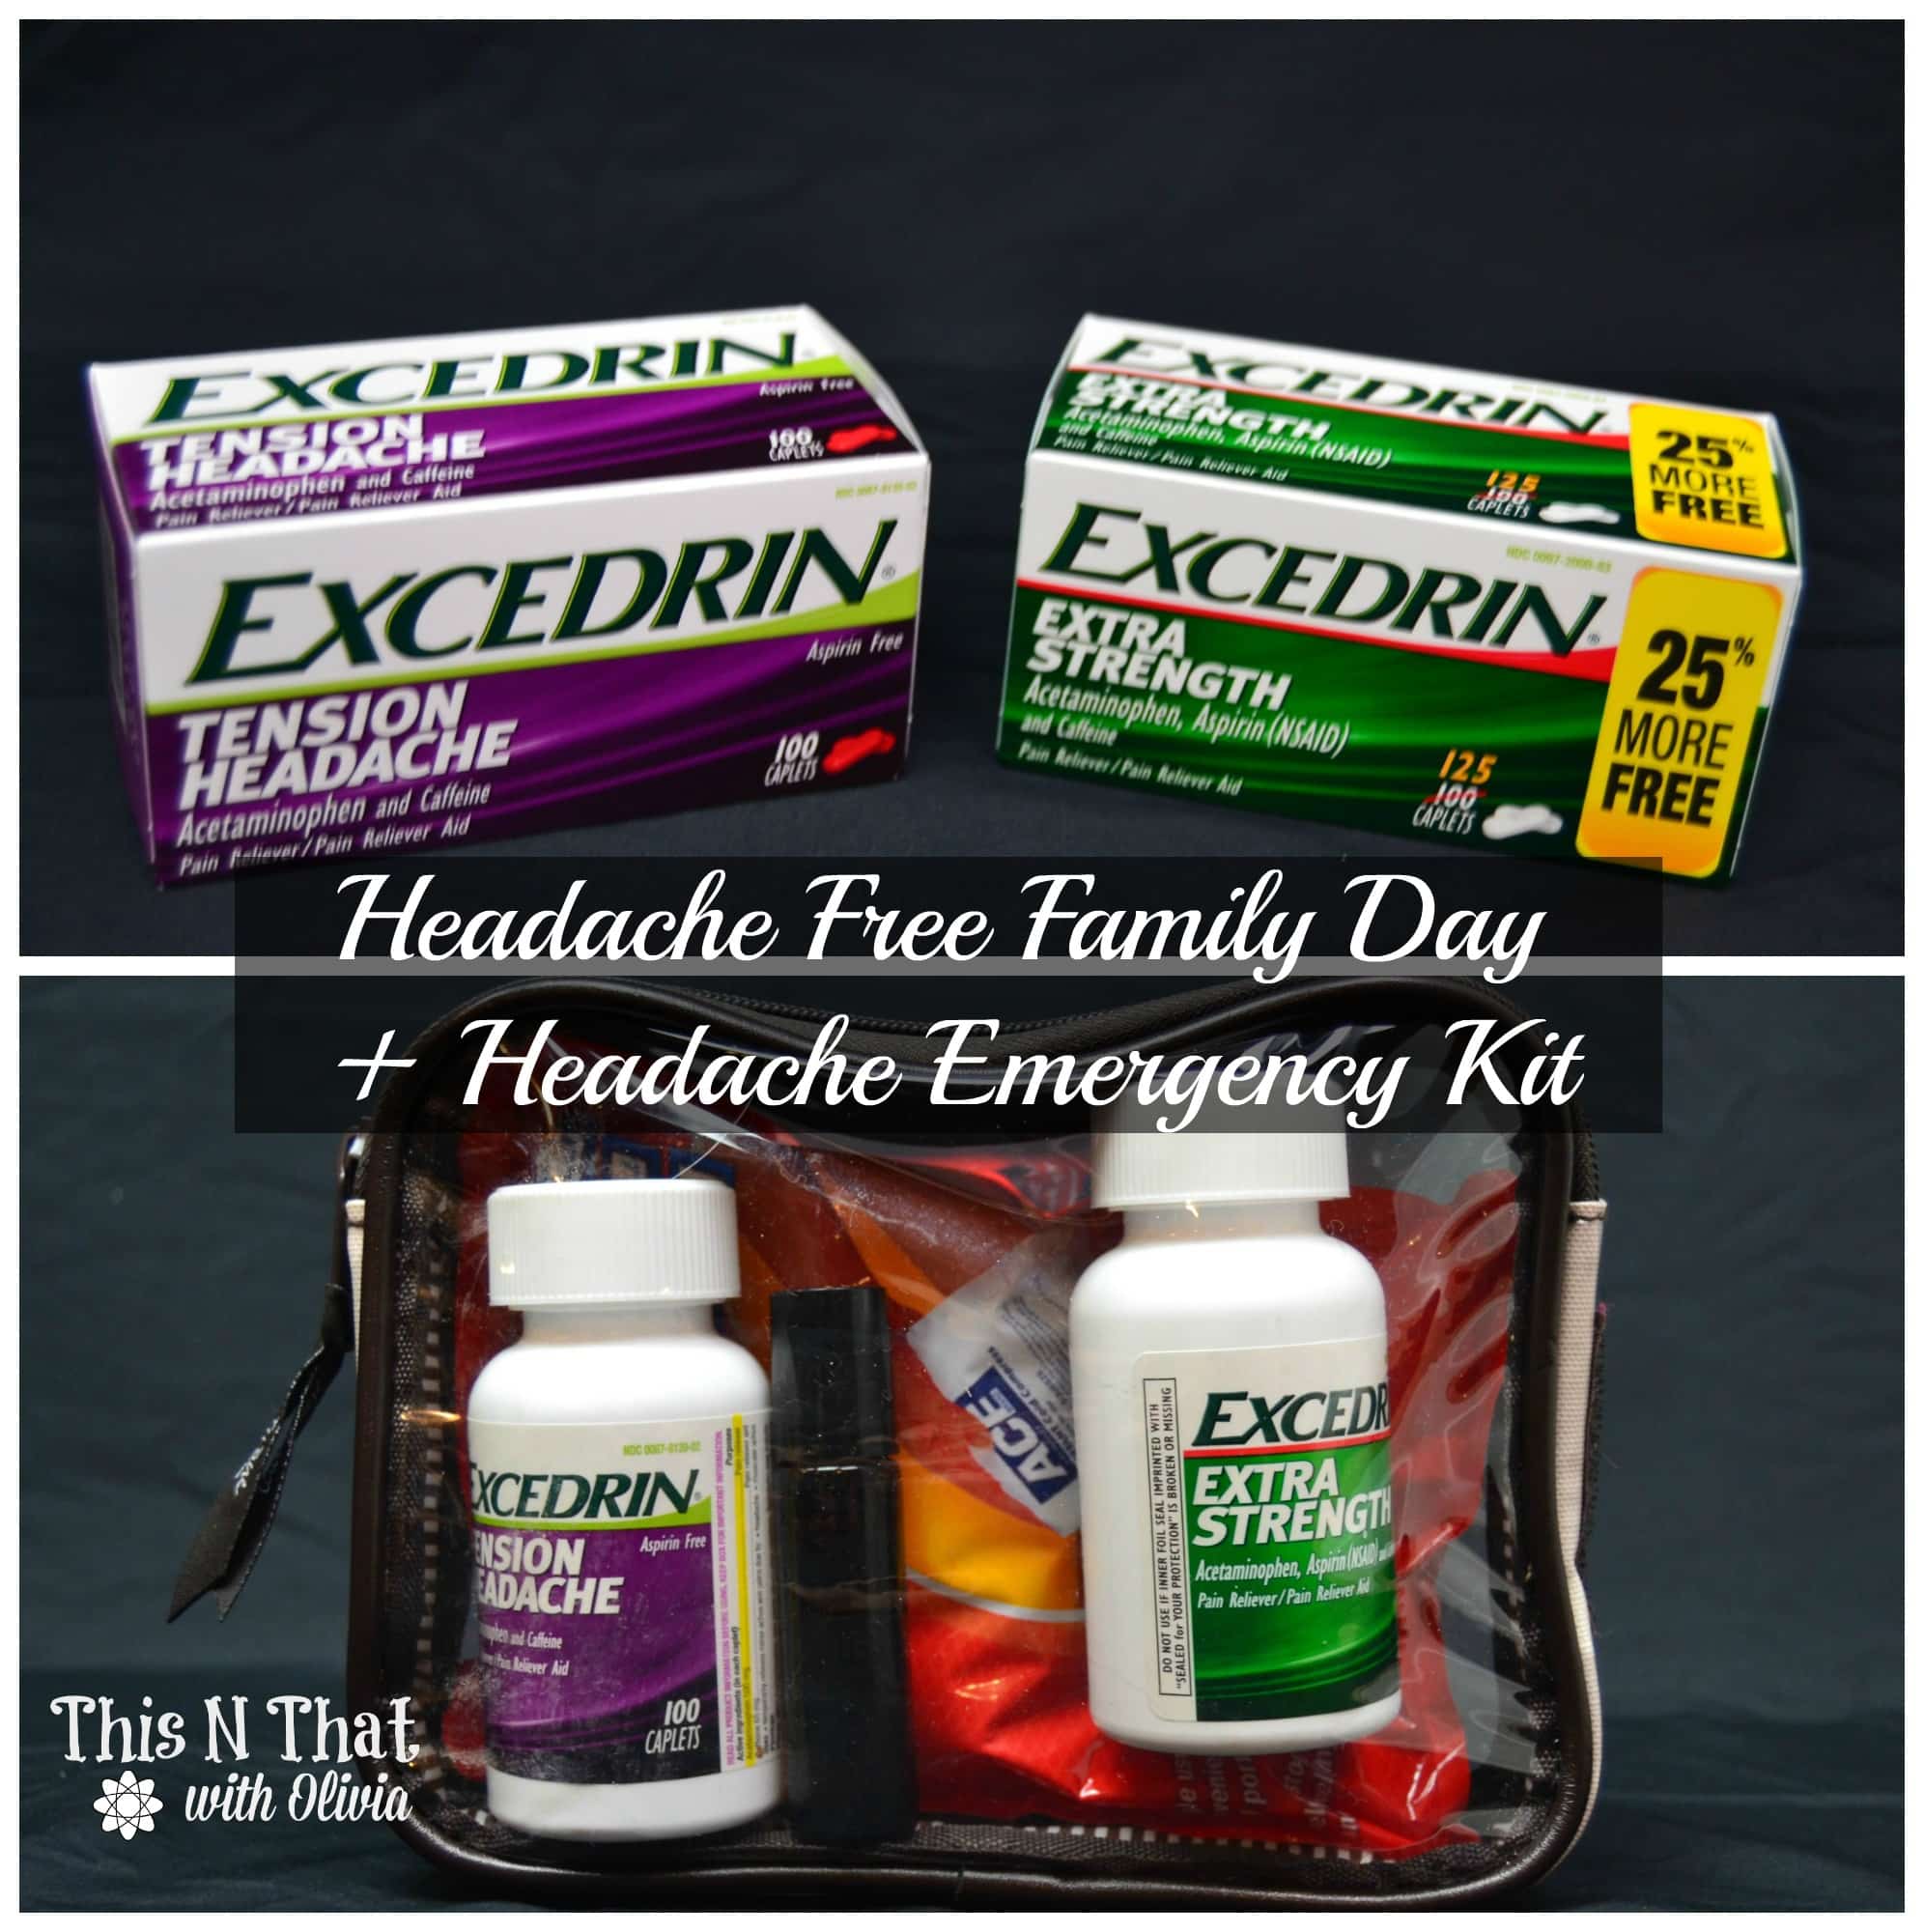 Headache Free Family Day + Headache Emergency Kit #MoreMomentsWithExcedrin #ad